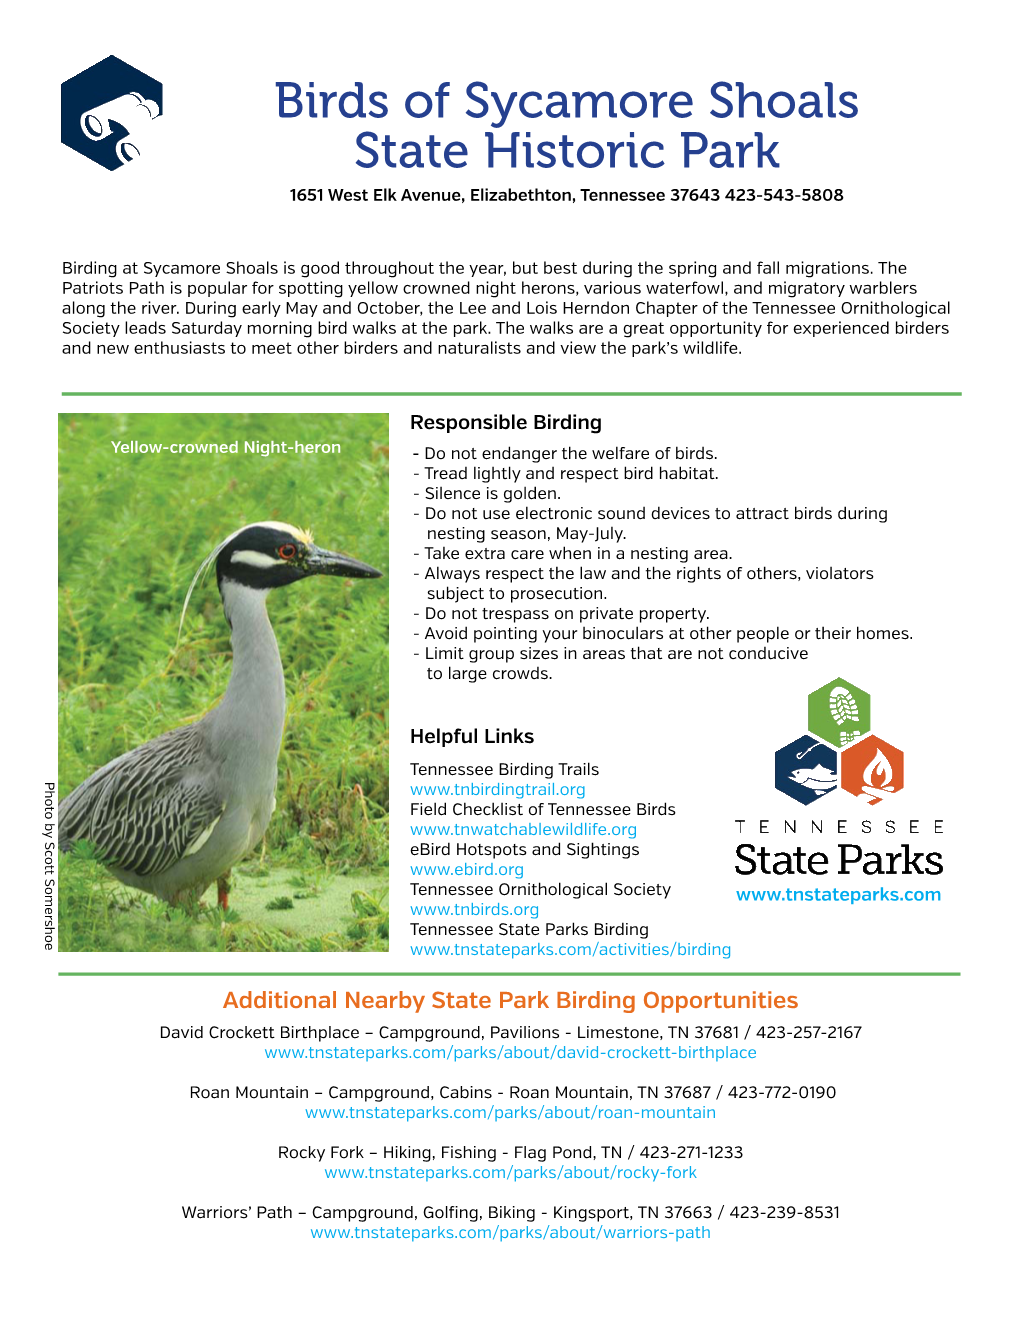 Birds of Sycamore Shoals State Historic Park 1651 West Elk Avenue, Elizabethton, Tennessee 37643 423-543-5808